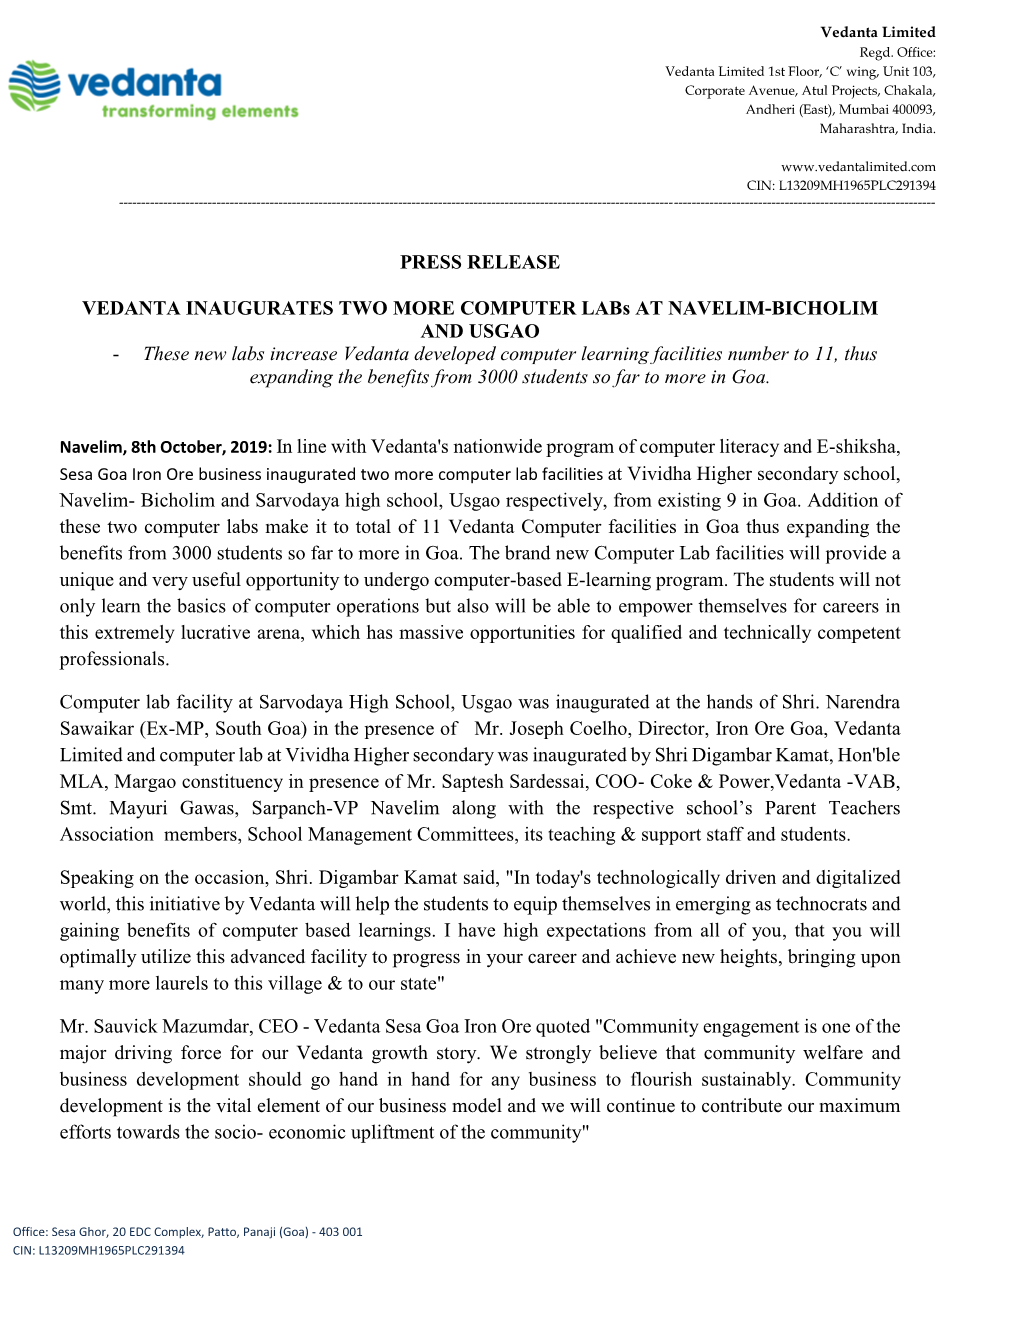 Press Release Vedanta Inaugurates Two More